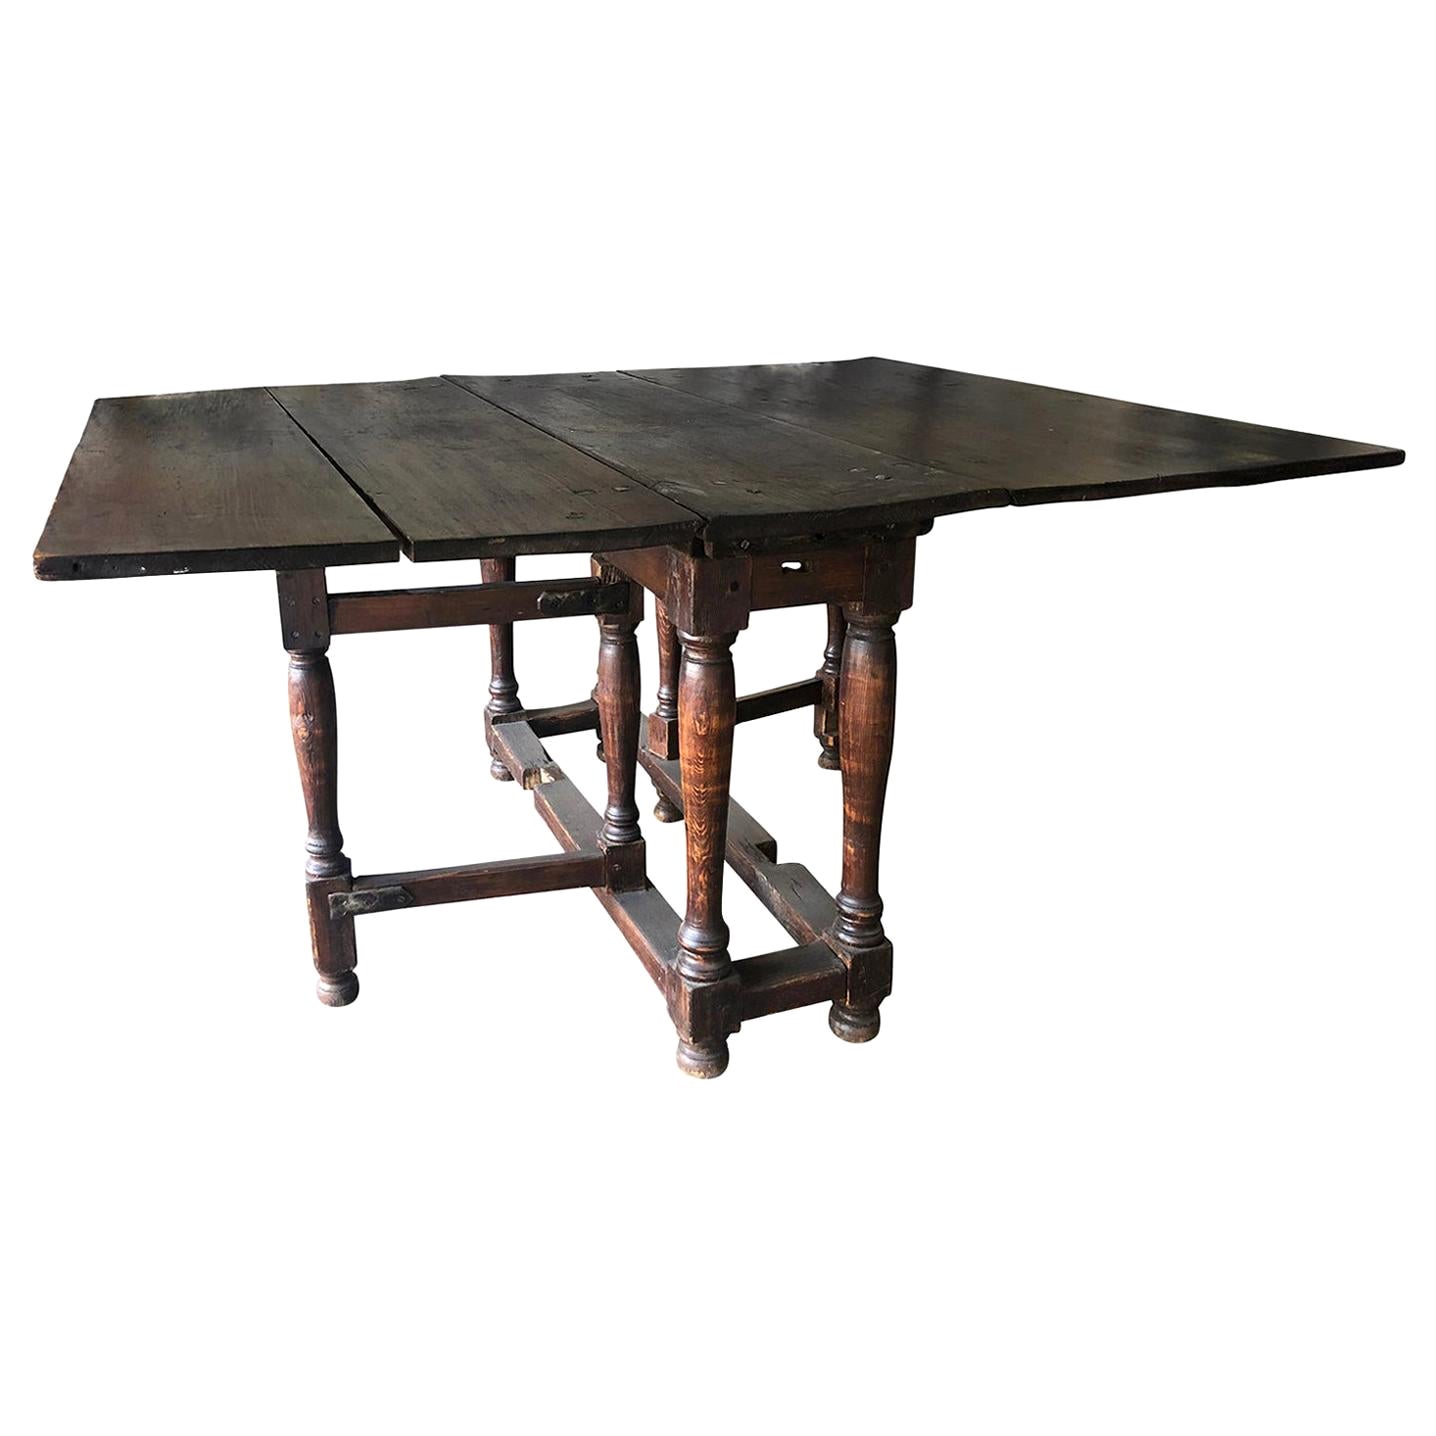 18th Century French Rustic Walnut Drop-Leaf Table - Antique Farmhouse Table